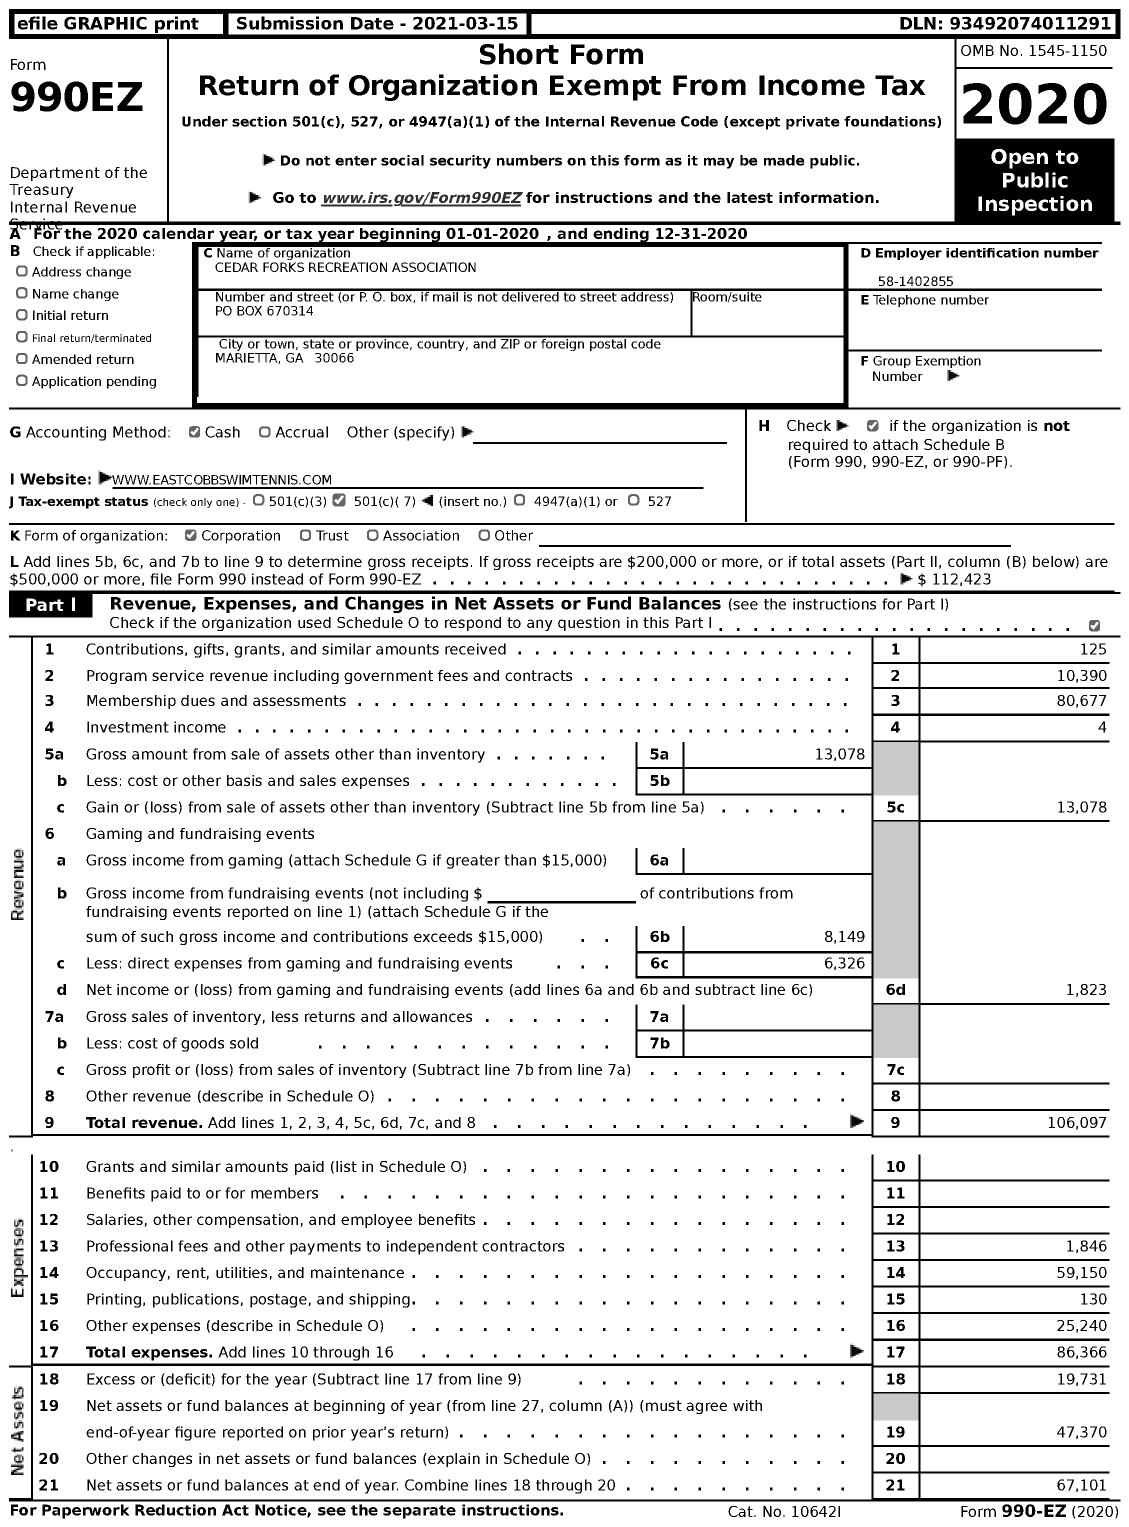 Image of first page of 2020 Form 990EZ for Cedar Forks Recreation Association